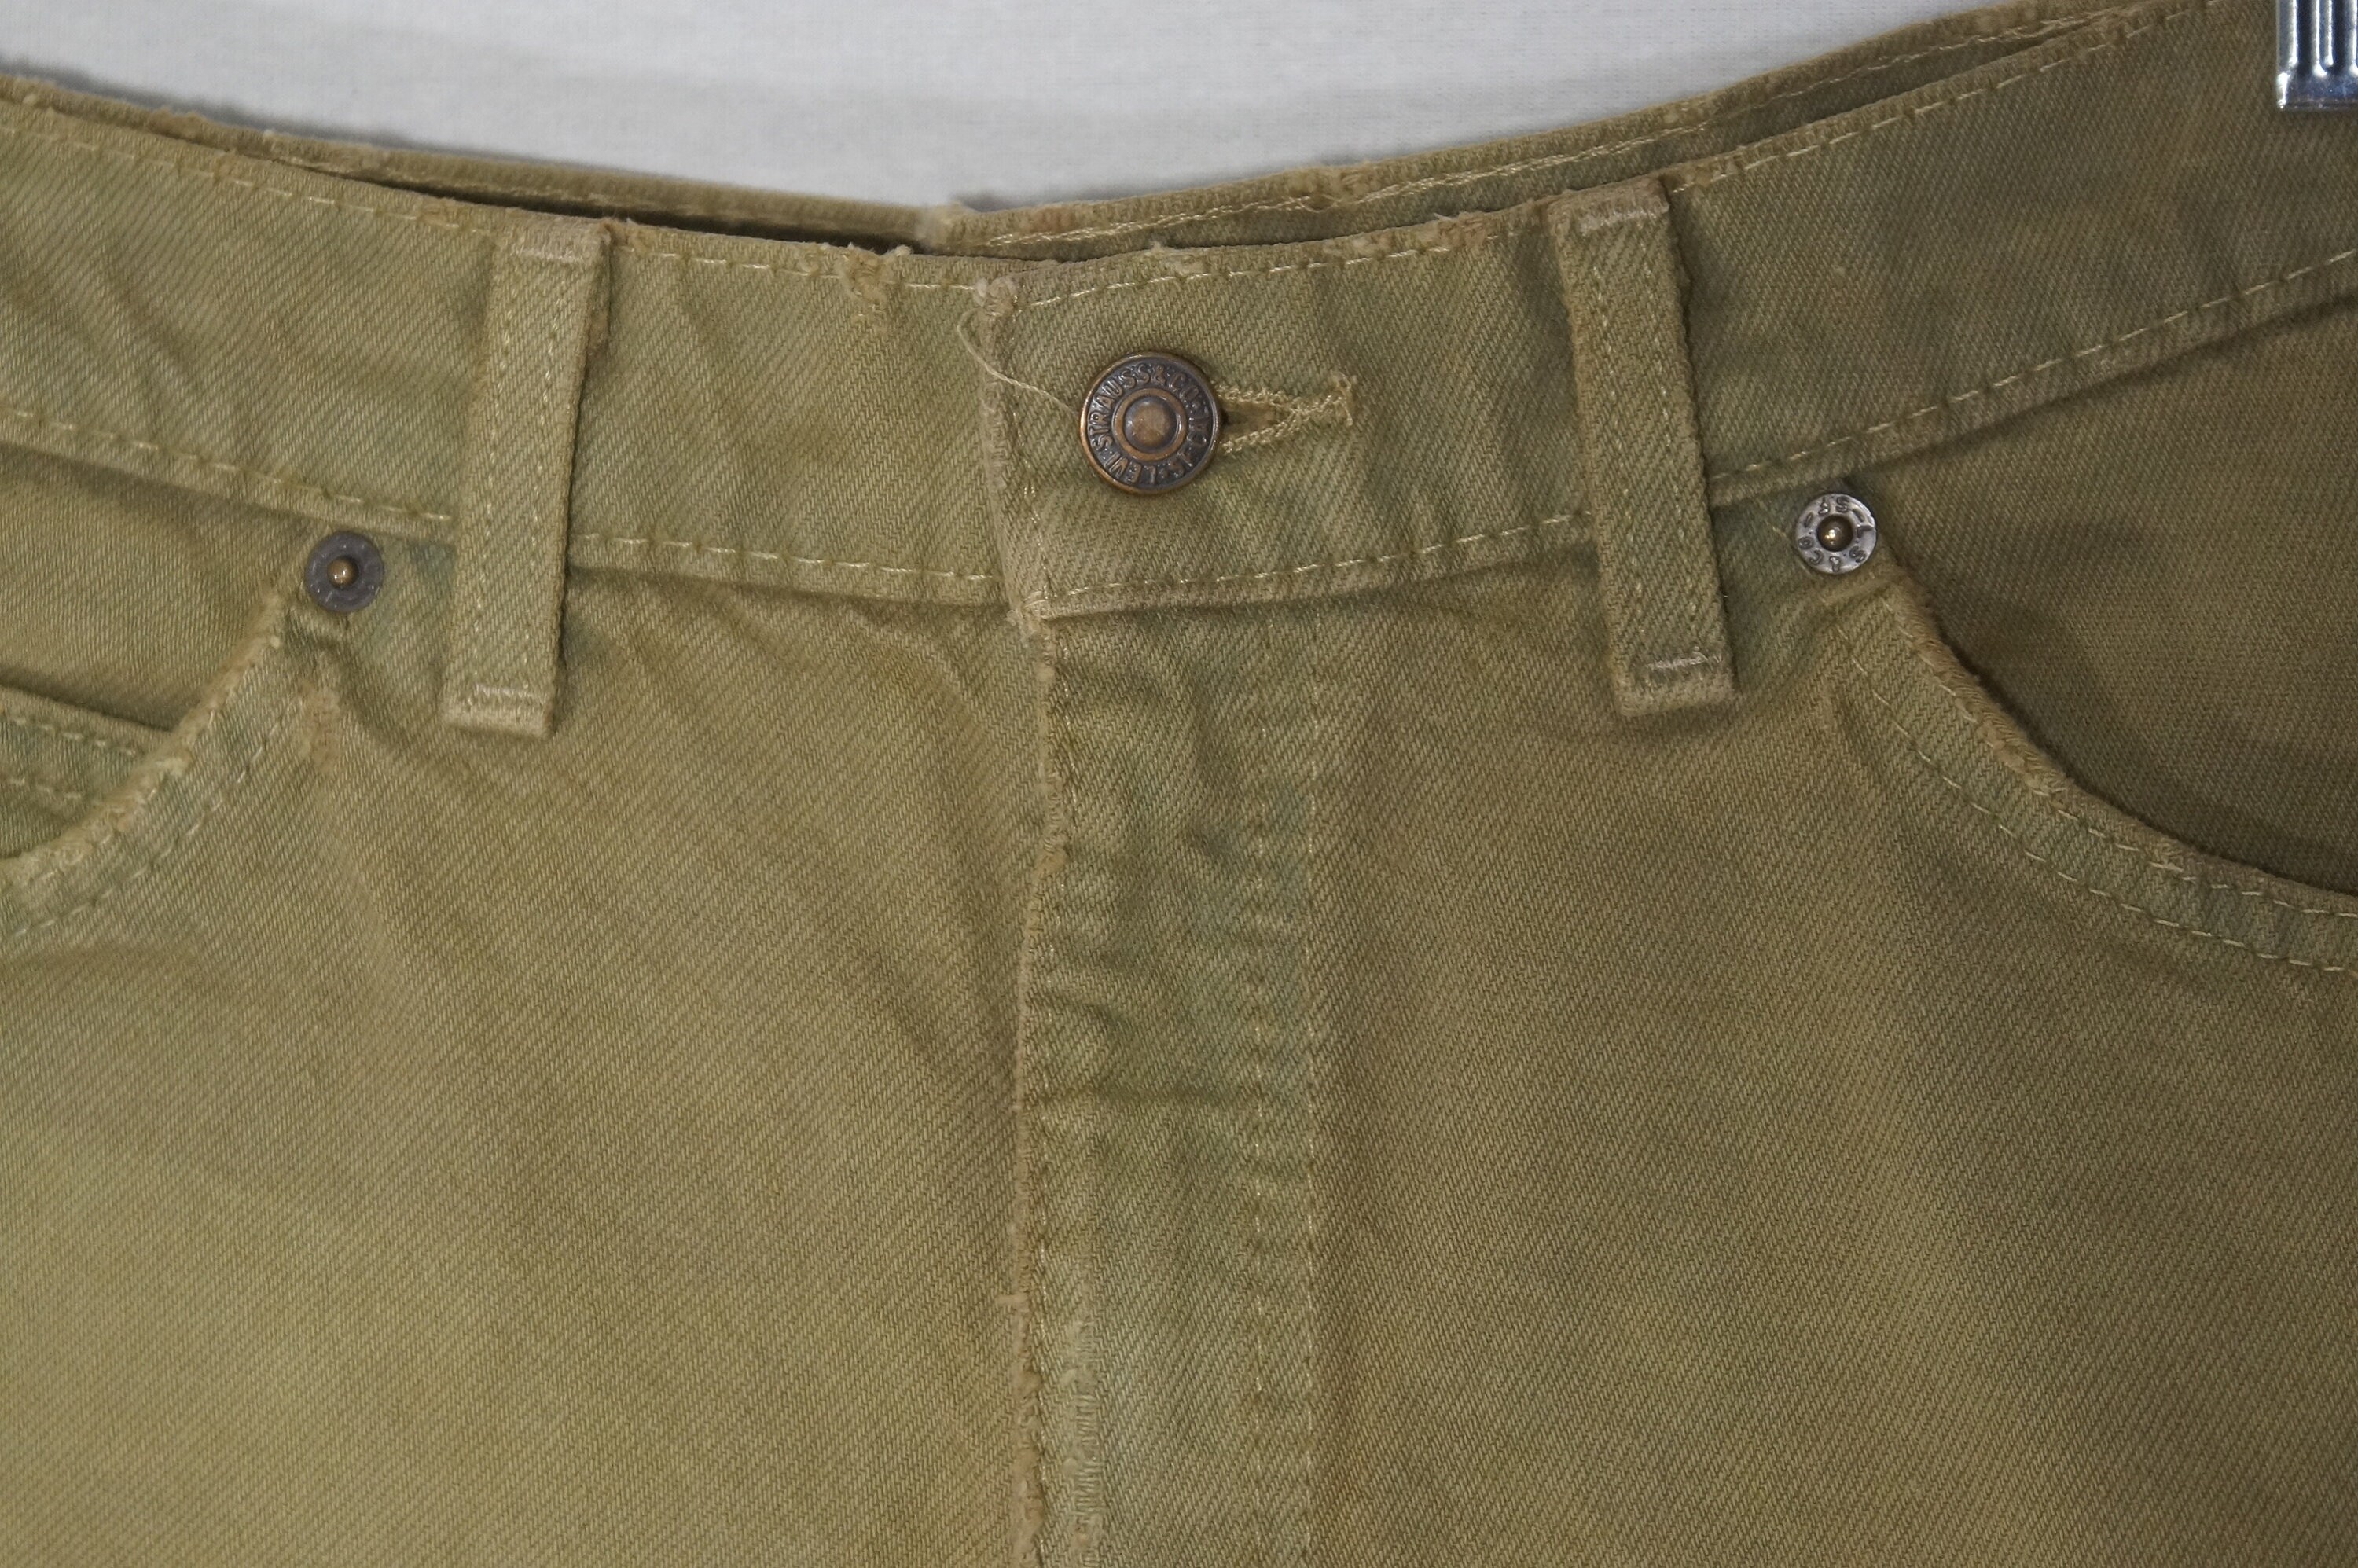 1980's Levi's Jean Skirt Vintage Mini Cutoff Denim | Etsy